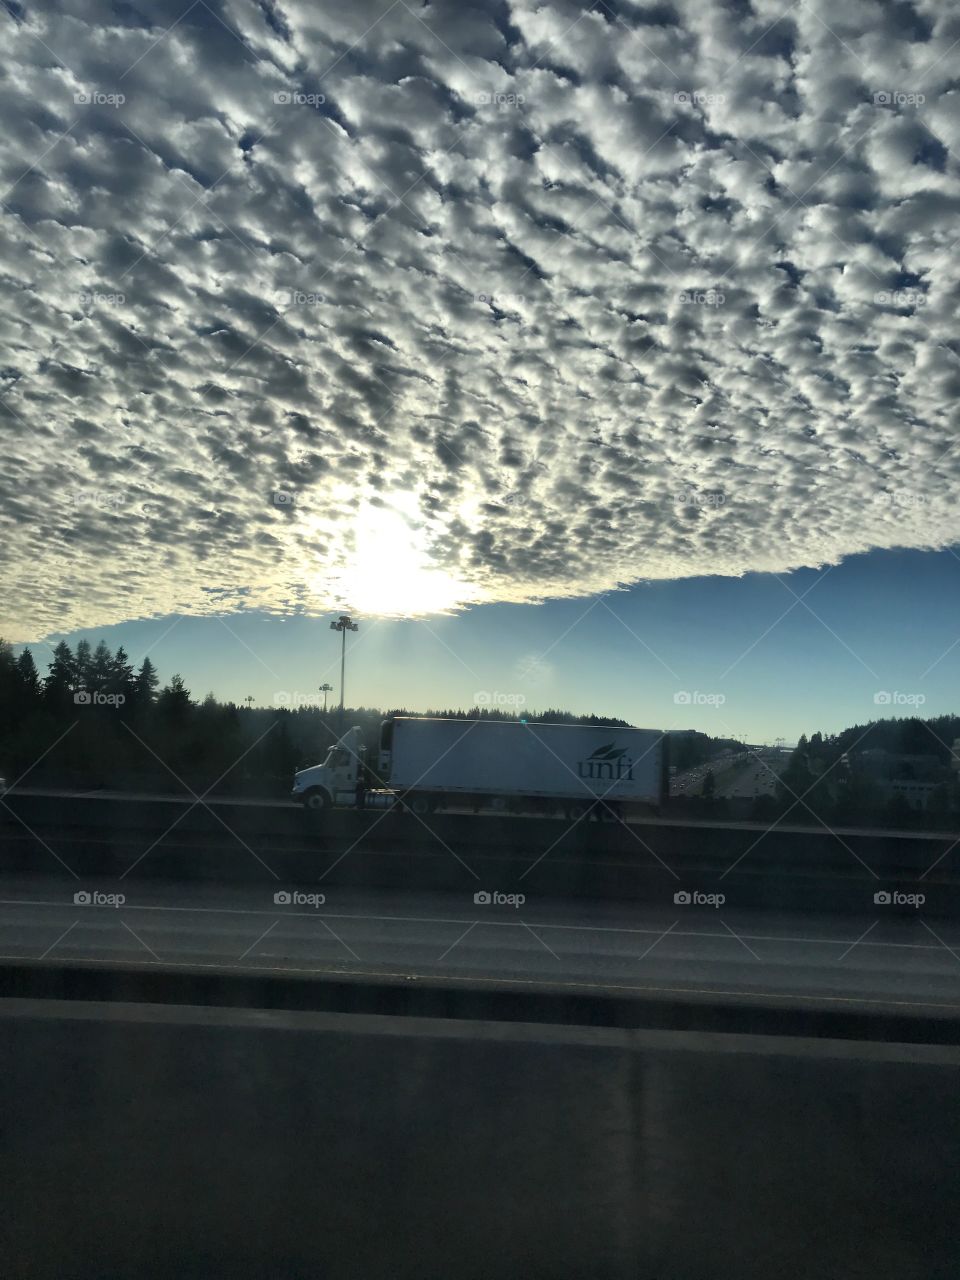 A beautiful sunrise on the highway in Seattle Washington.